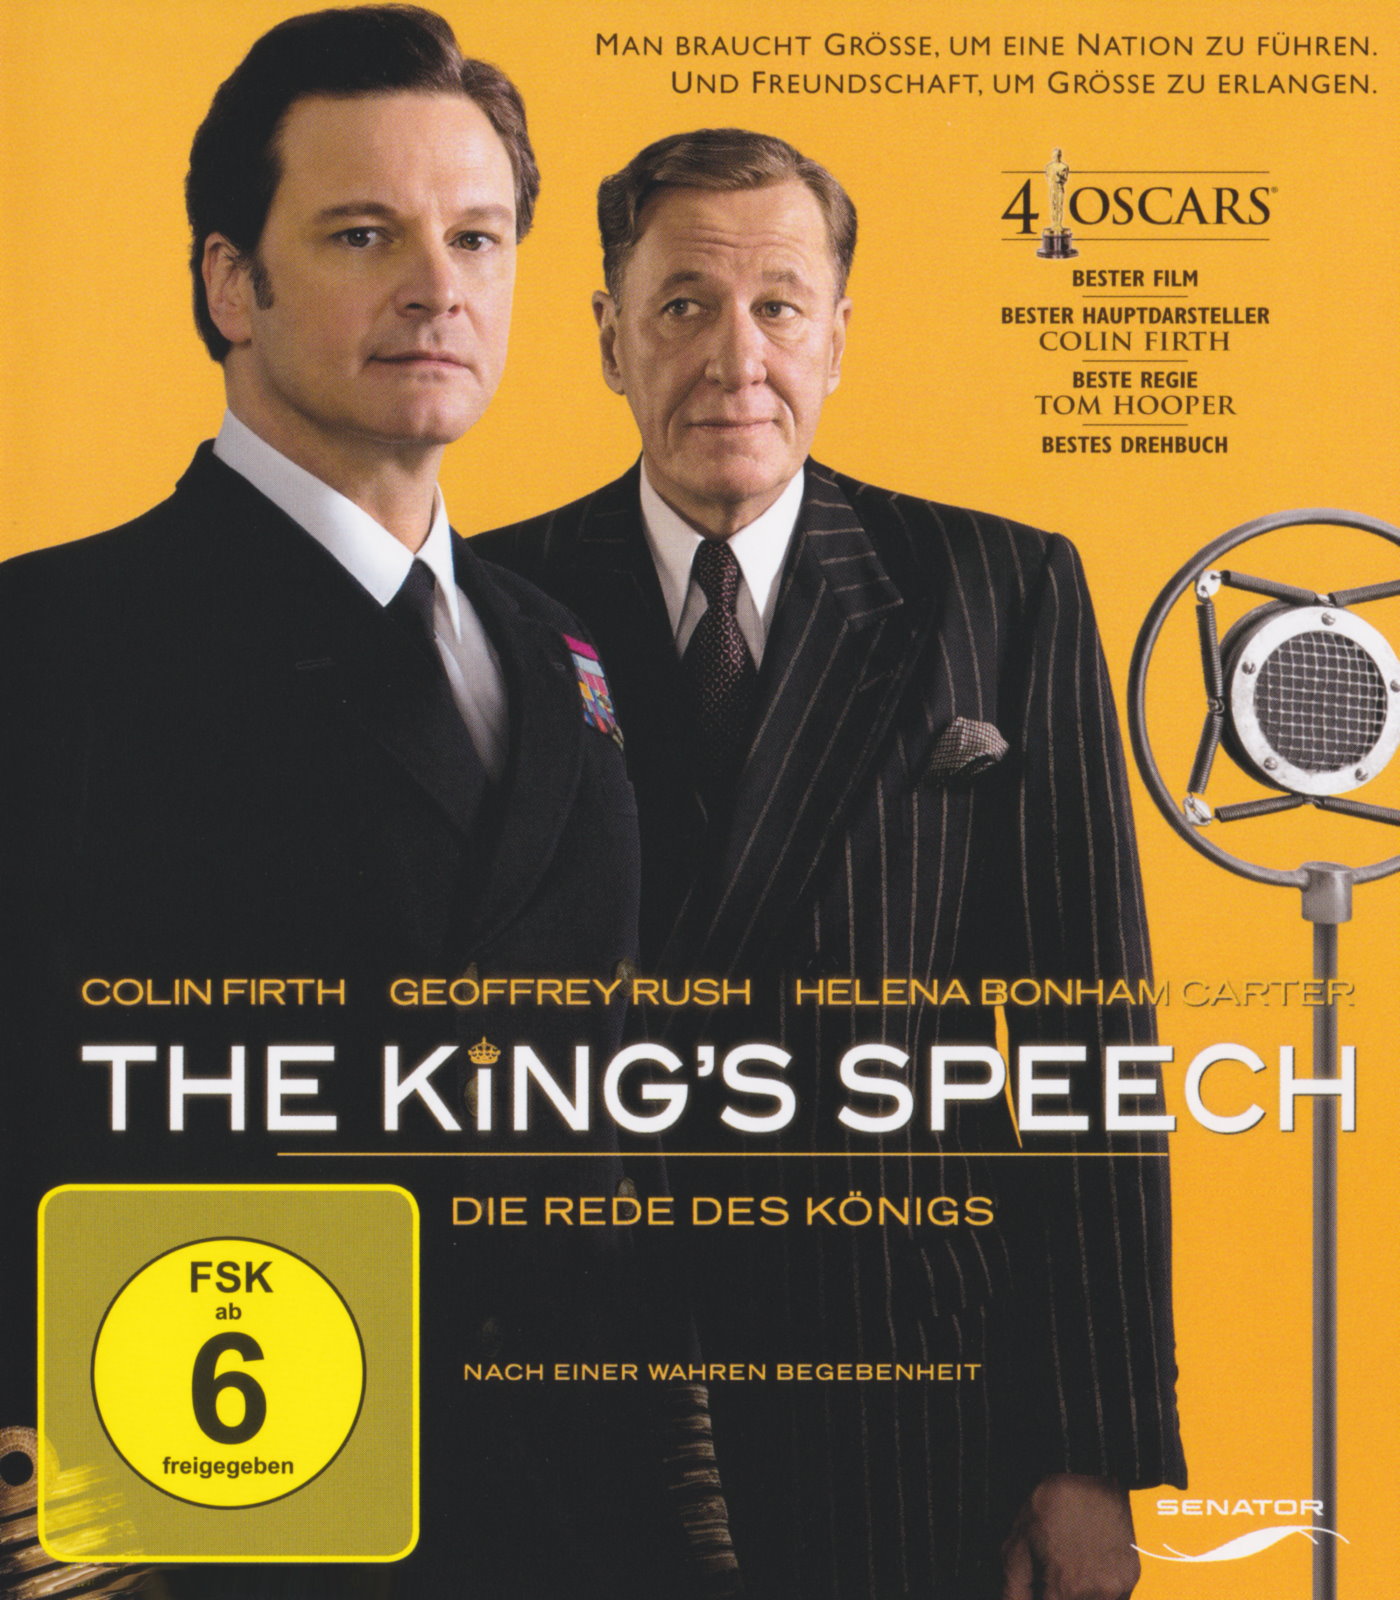 Cover - The King's Speech - Die Rede des Königs.jpg